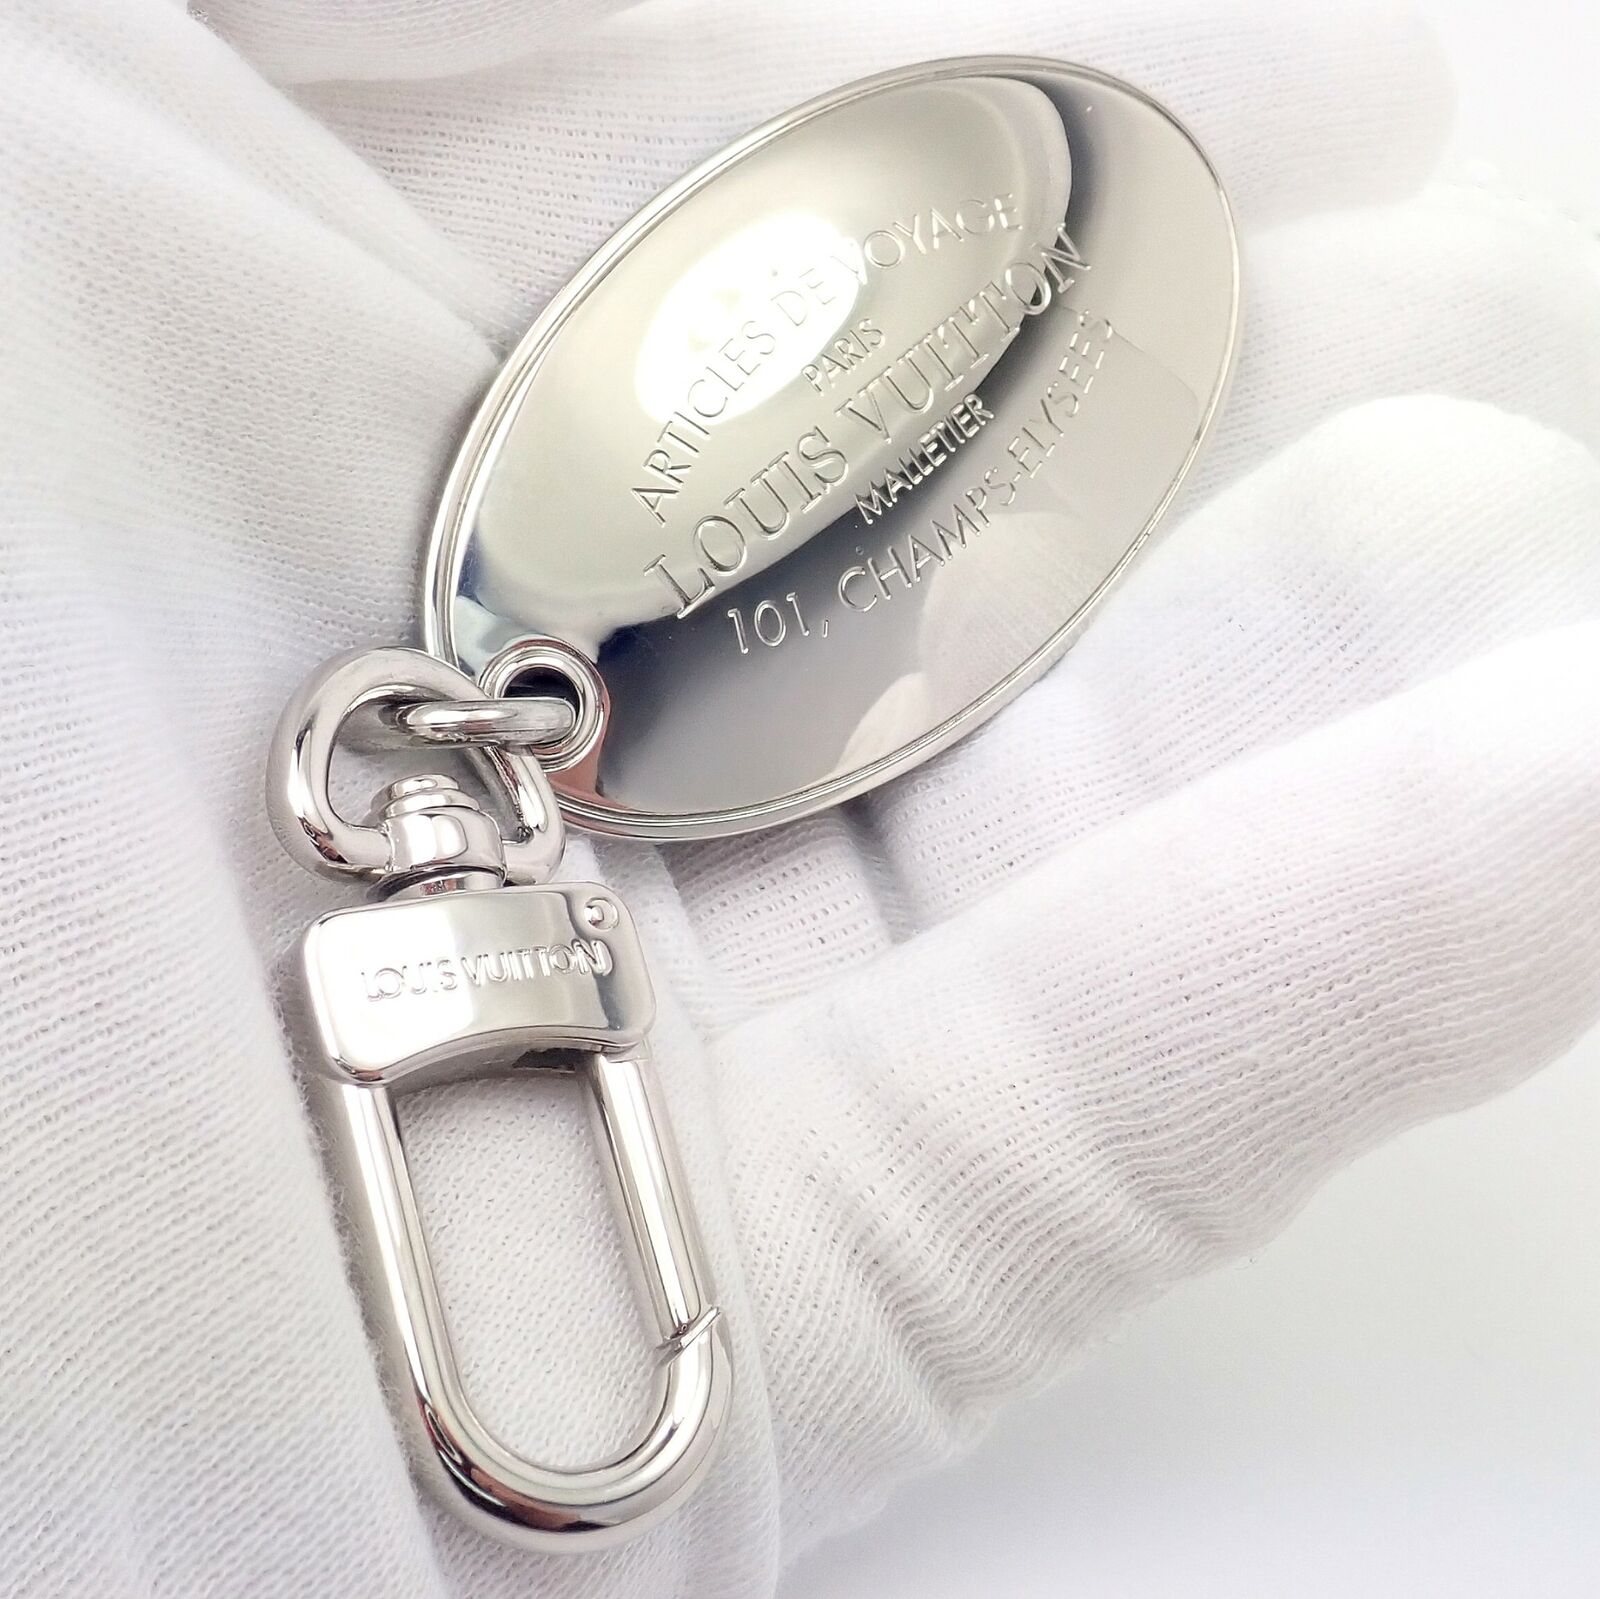 Louis Vuitton Key and Lock keychain  Louis vuitton accessories, Louis  vuitton, Vuitton